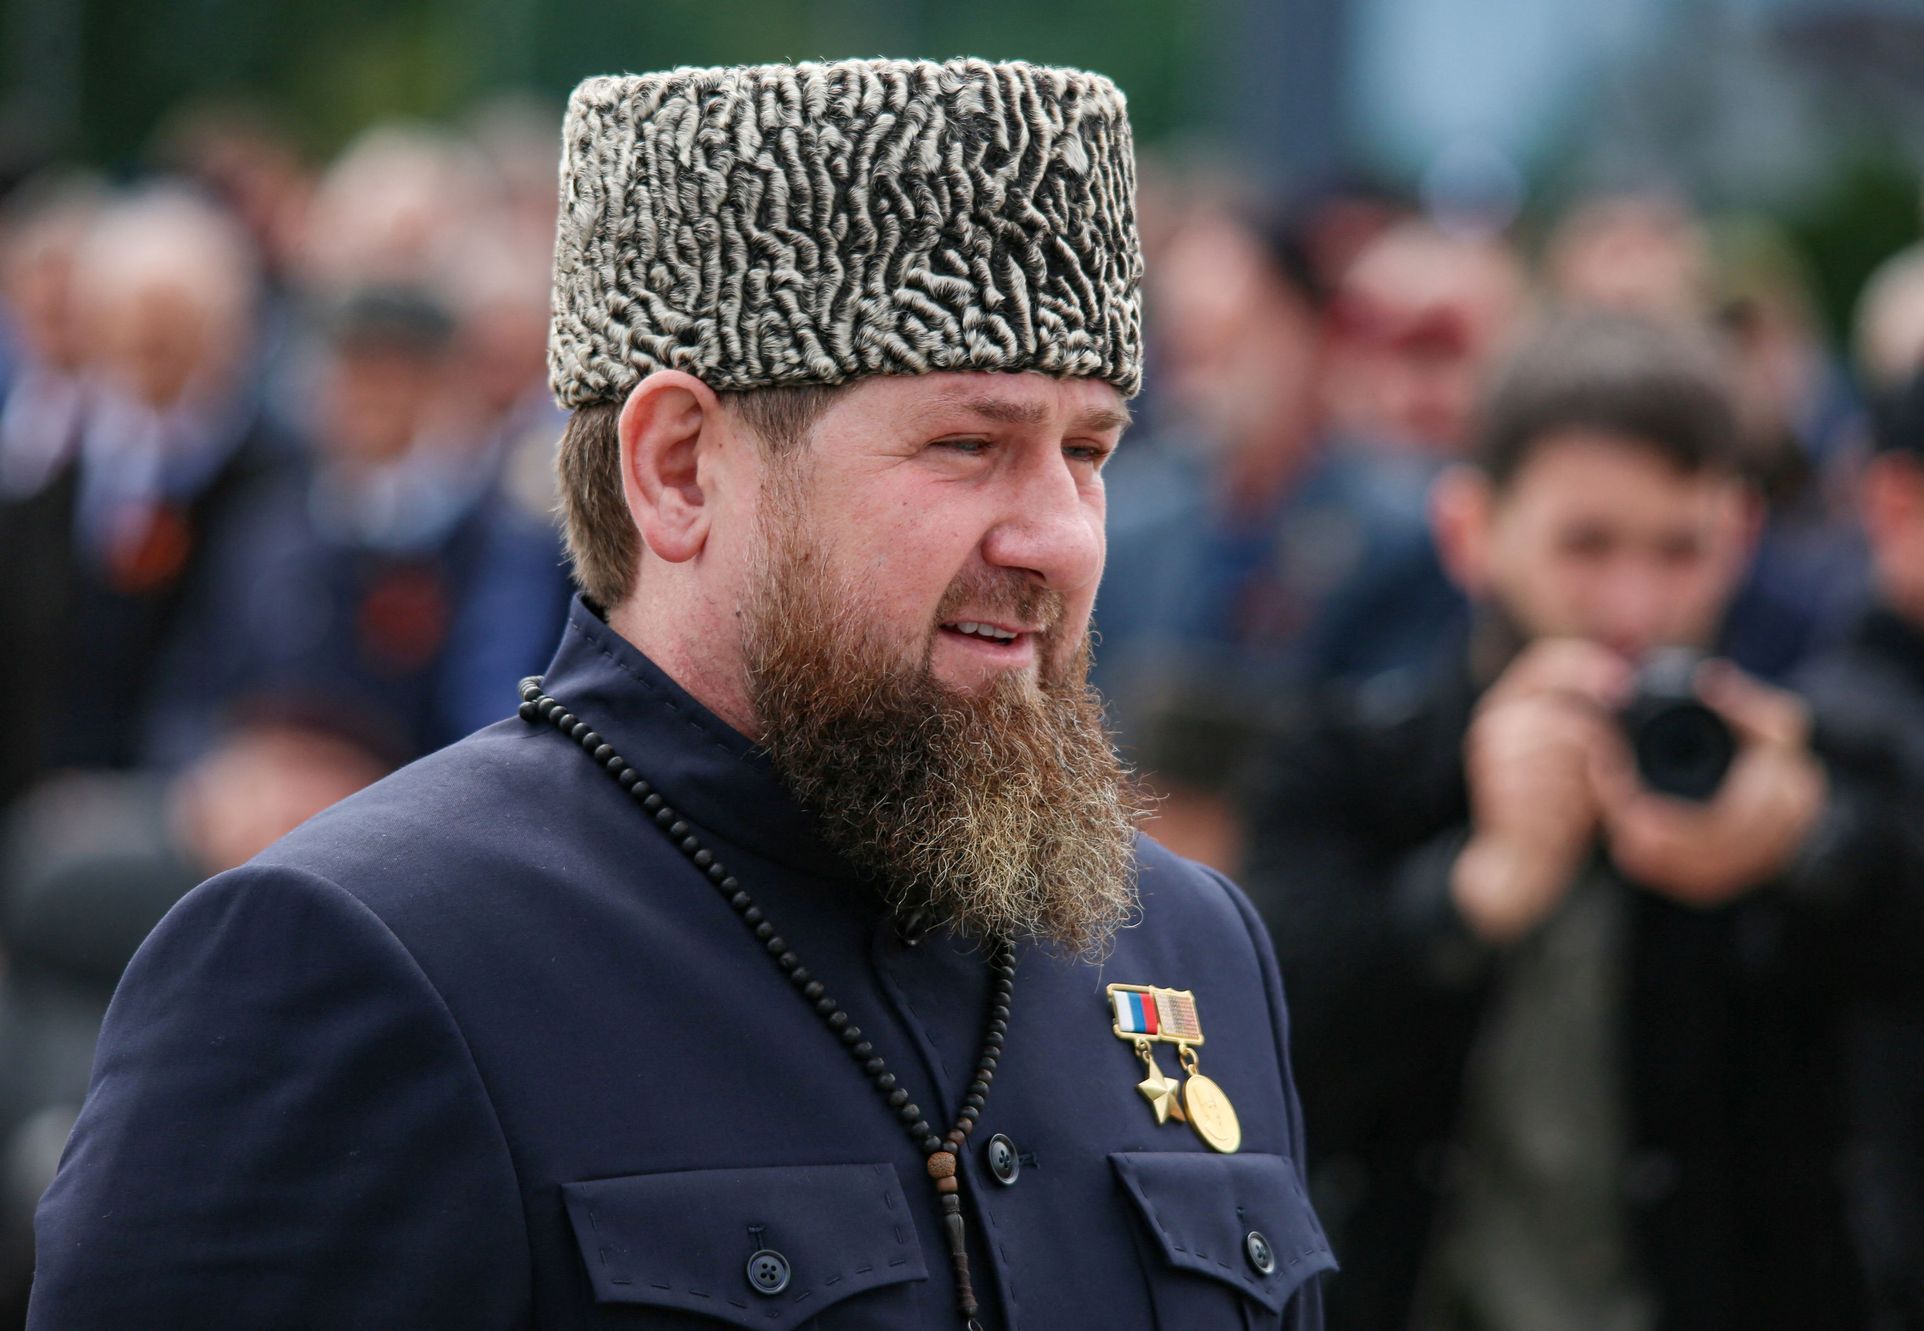 Ramzan Kadyrov, Čečensko, Rusko